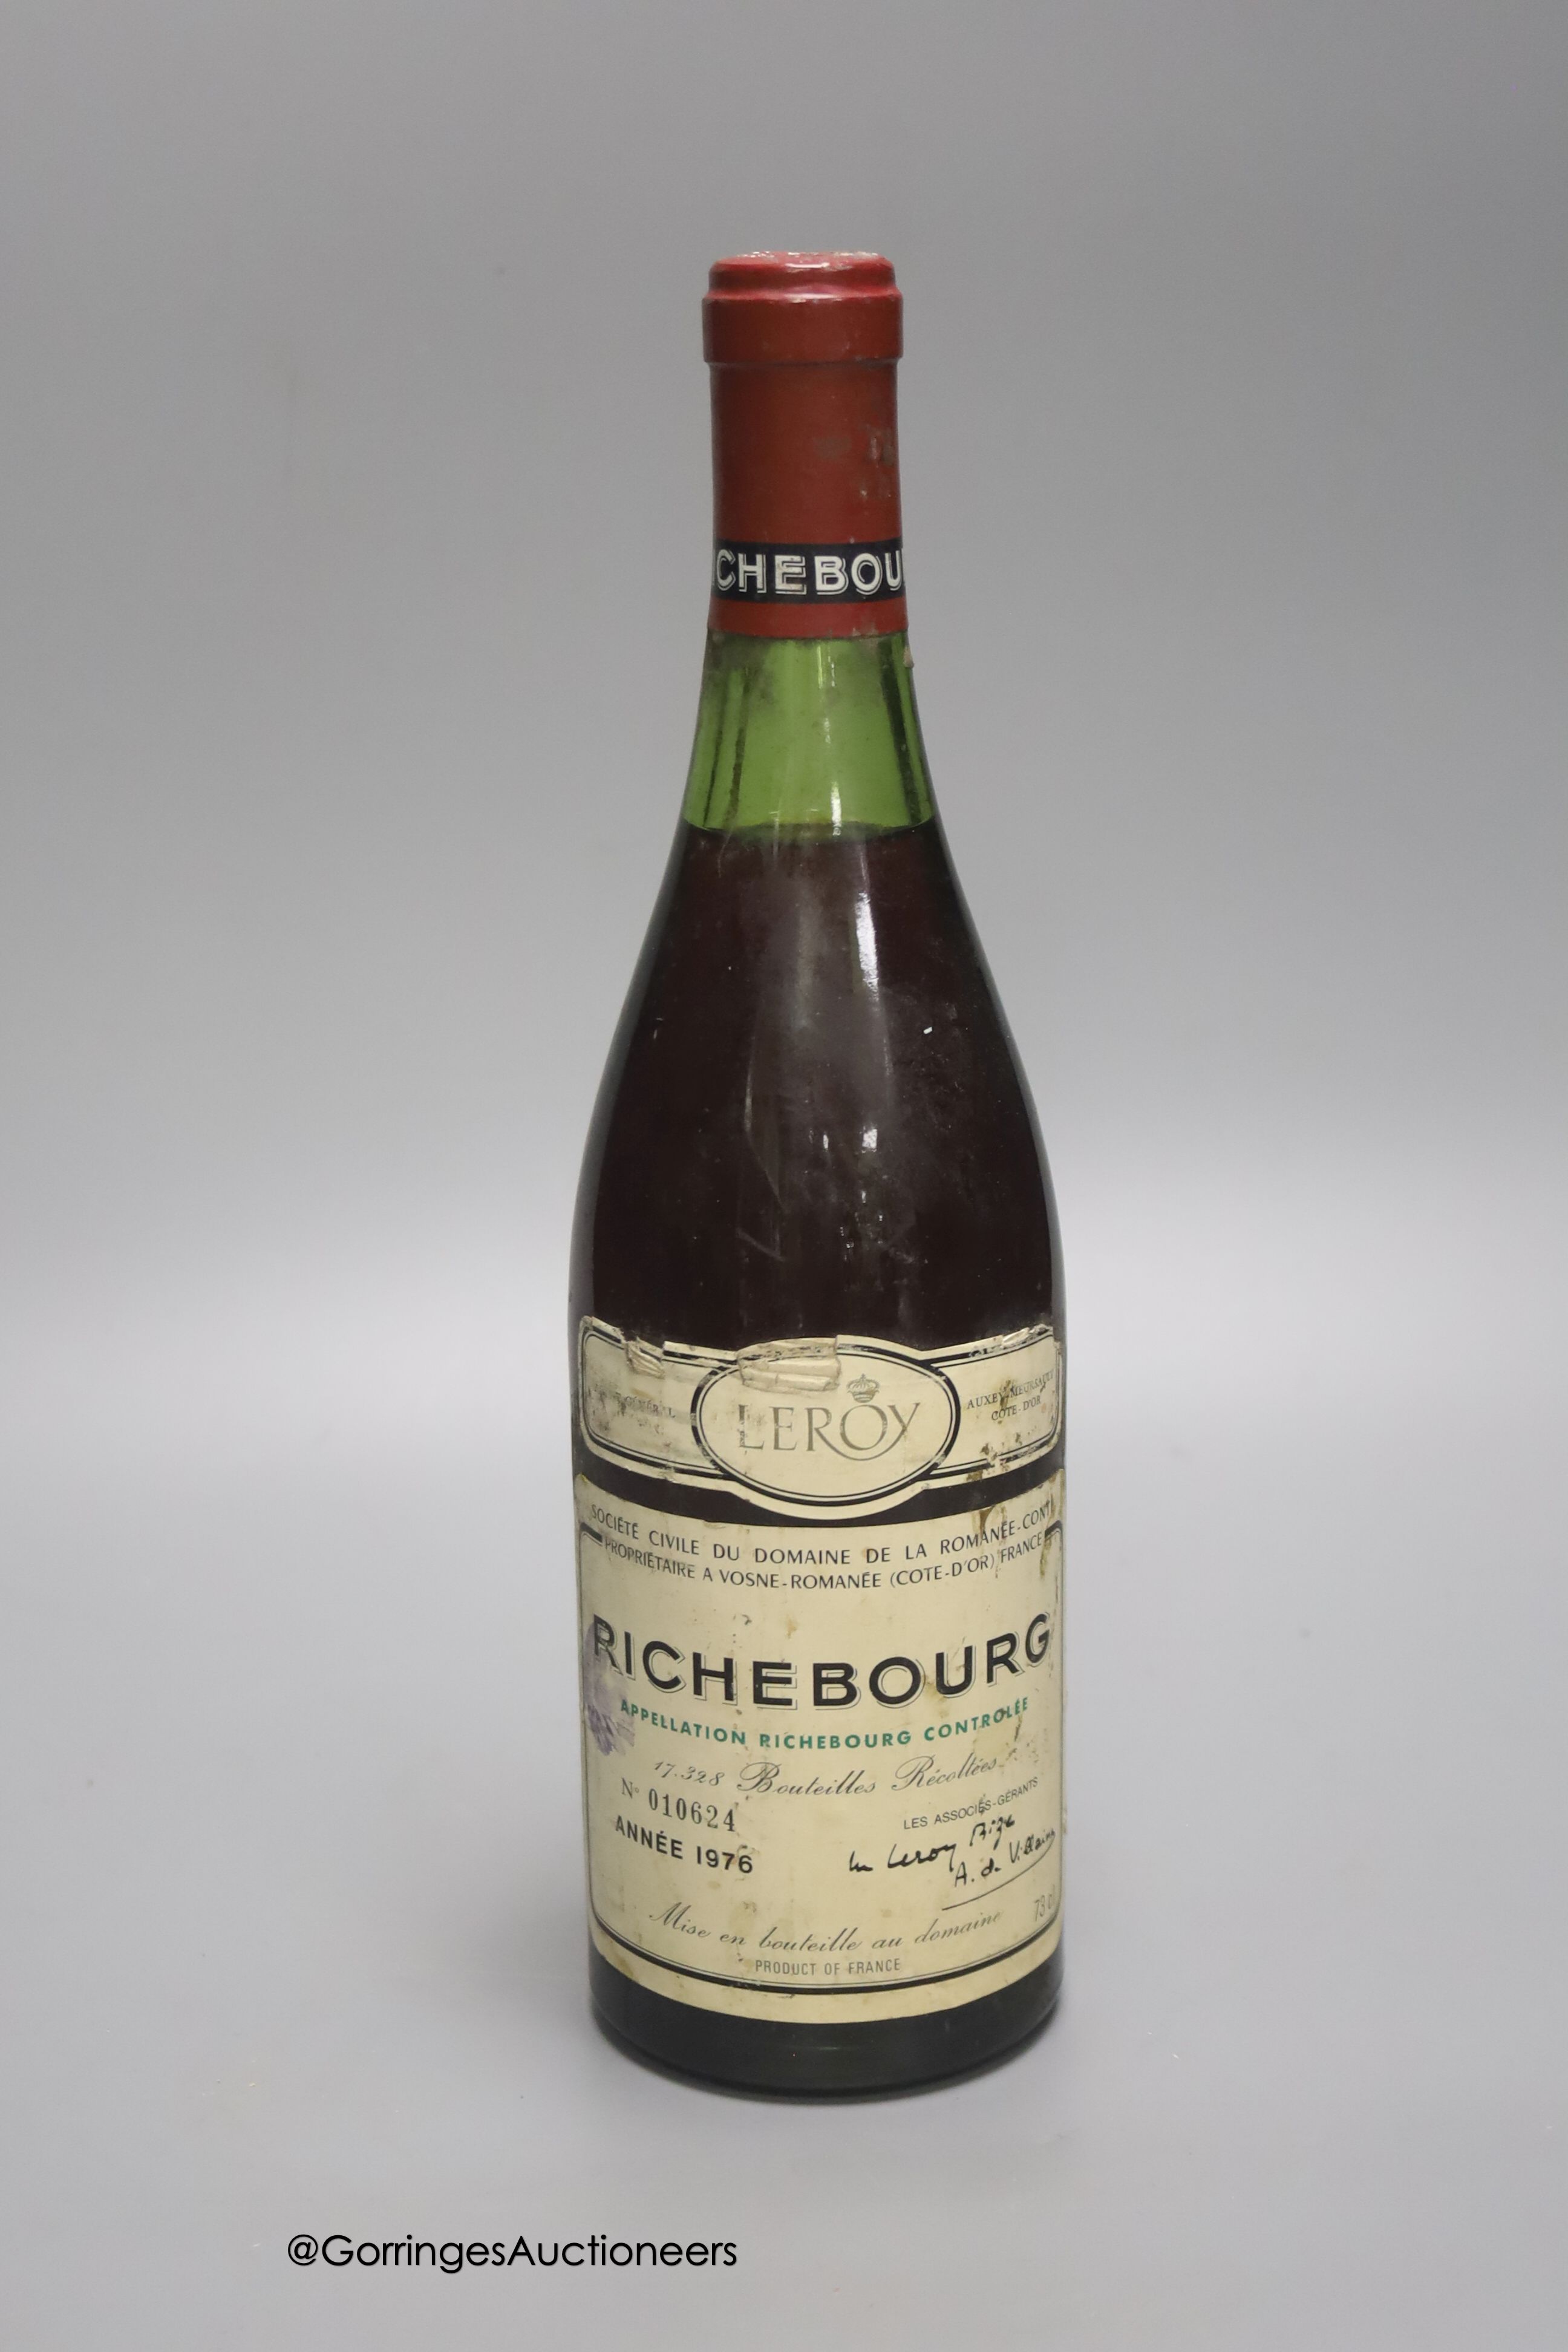 A bottle of Leroy 1976 Richebourg wine